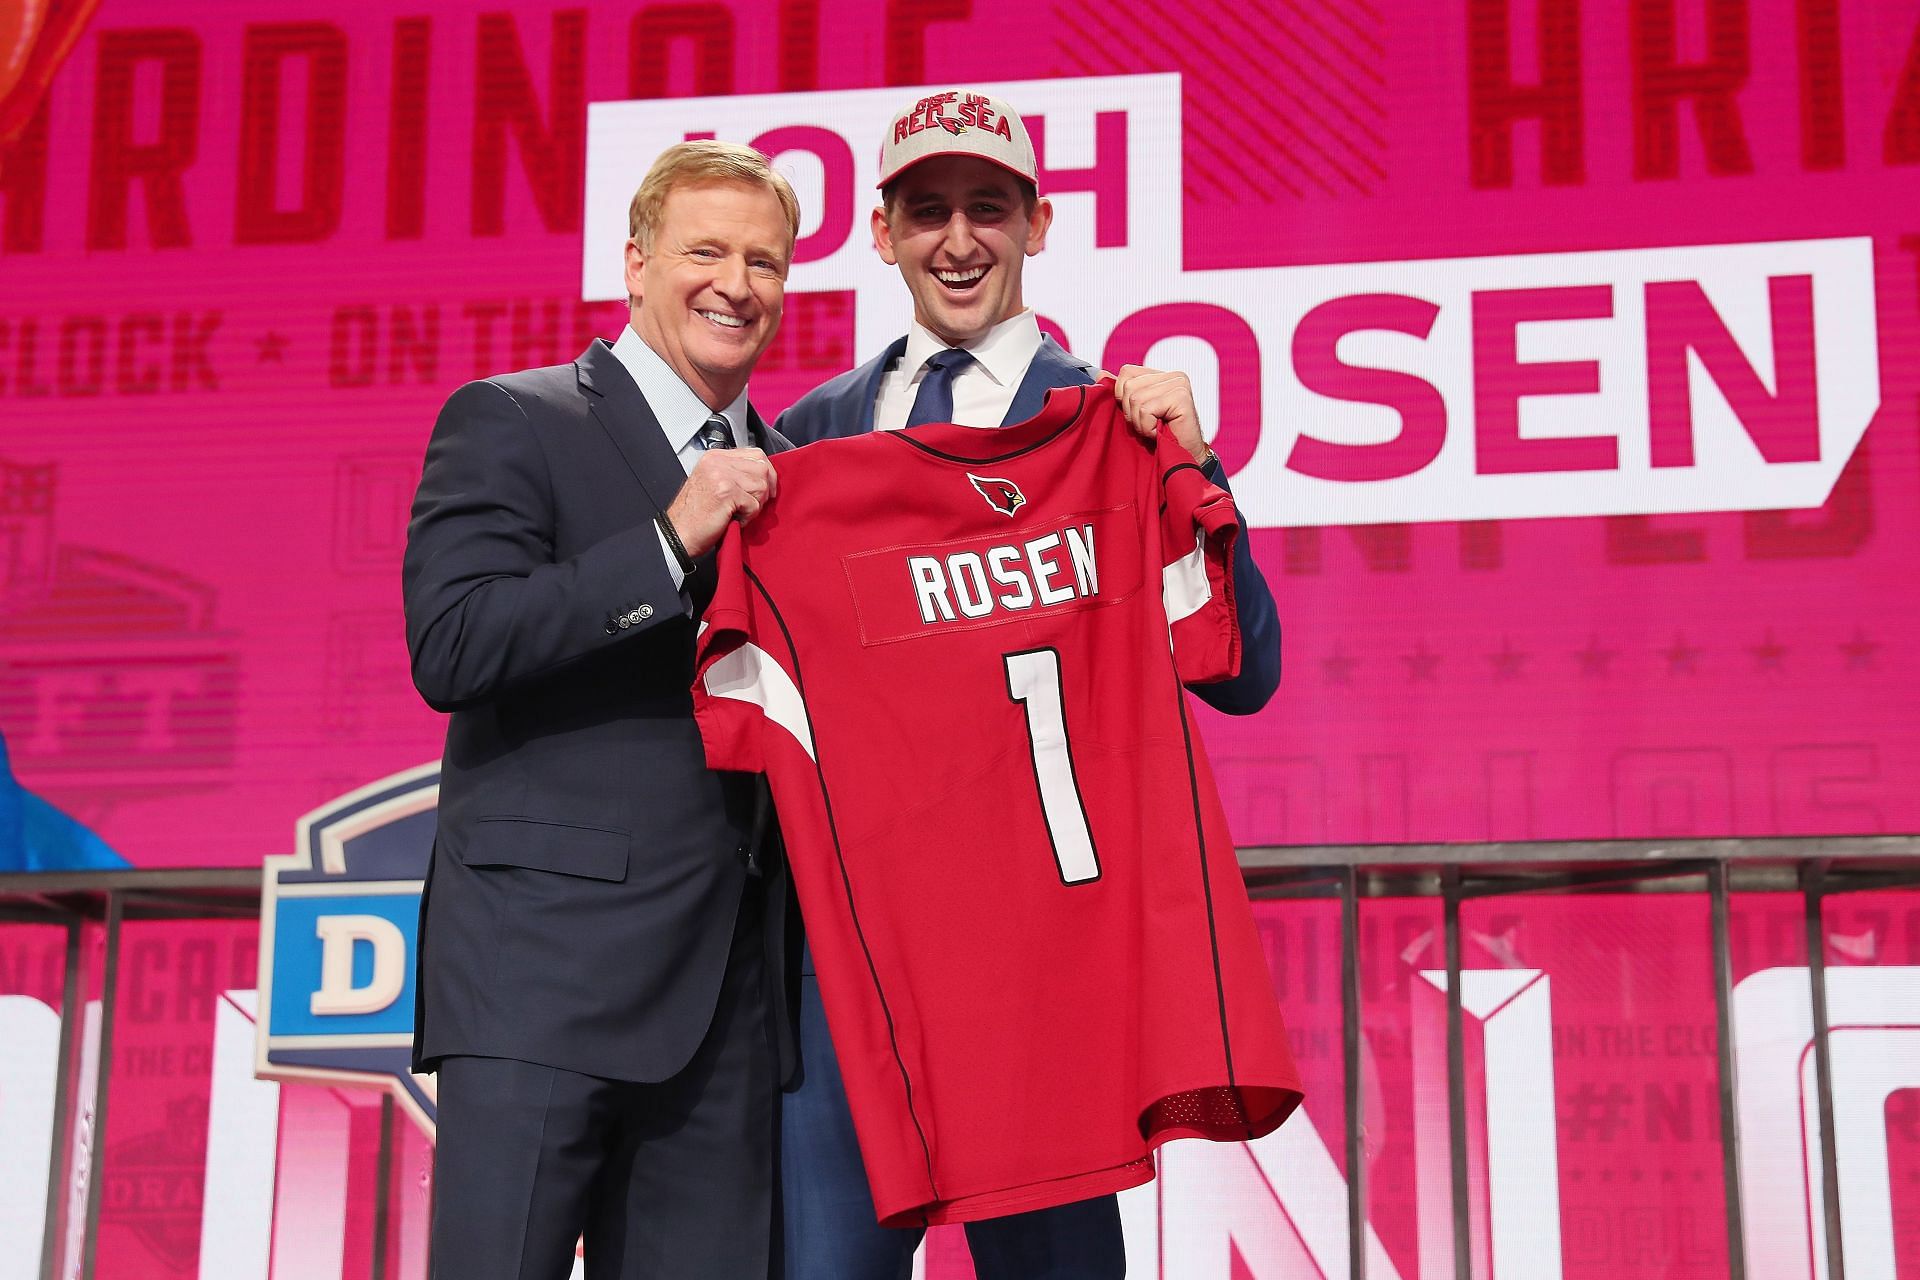 Josh Rosen of the Cardinals at the 2018 NFL Draft